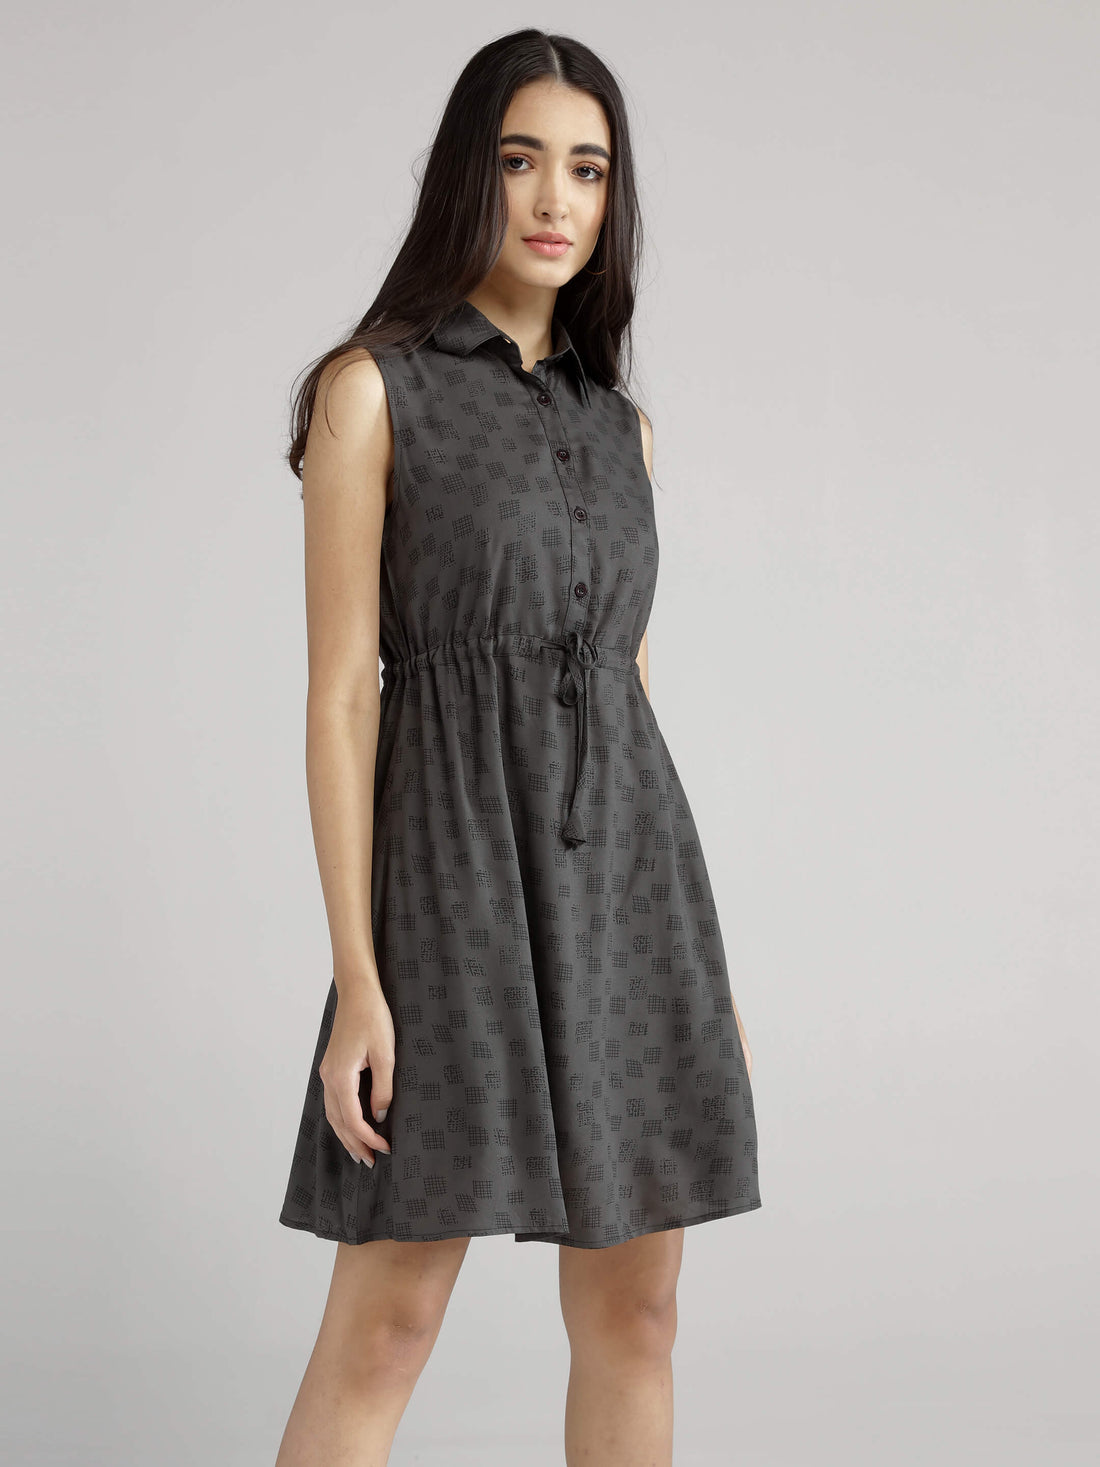 Grey Sleeveless Dress